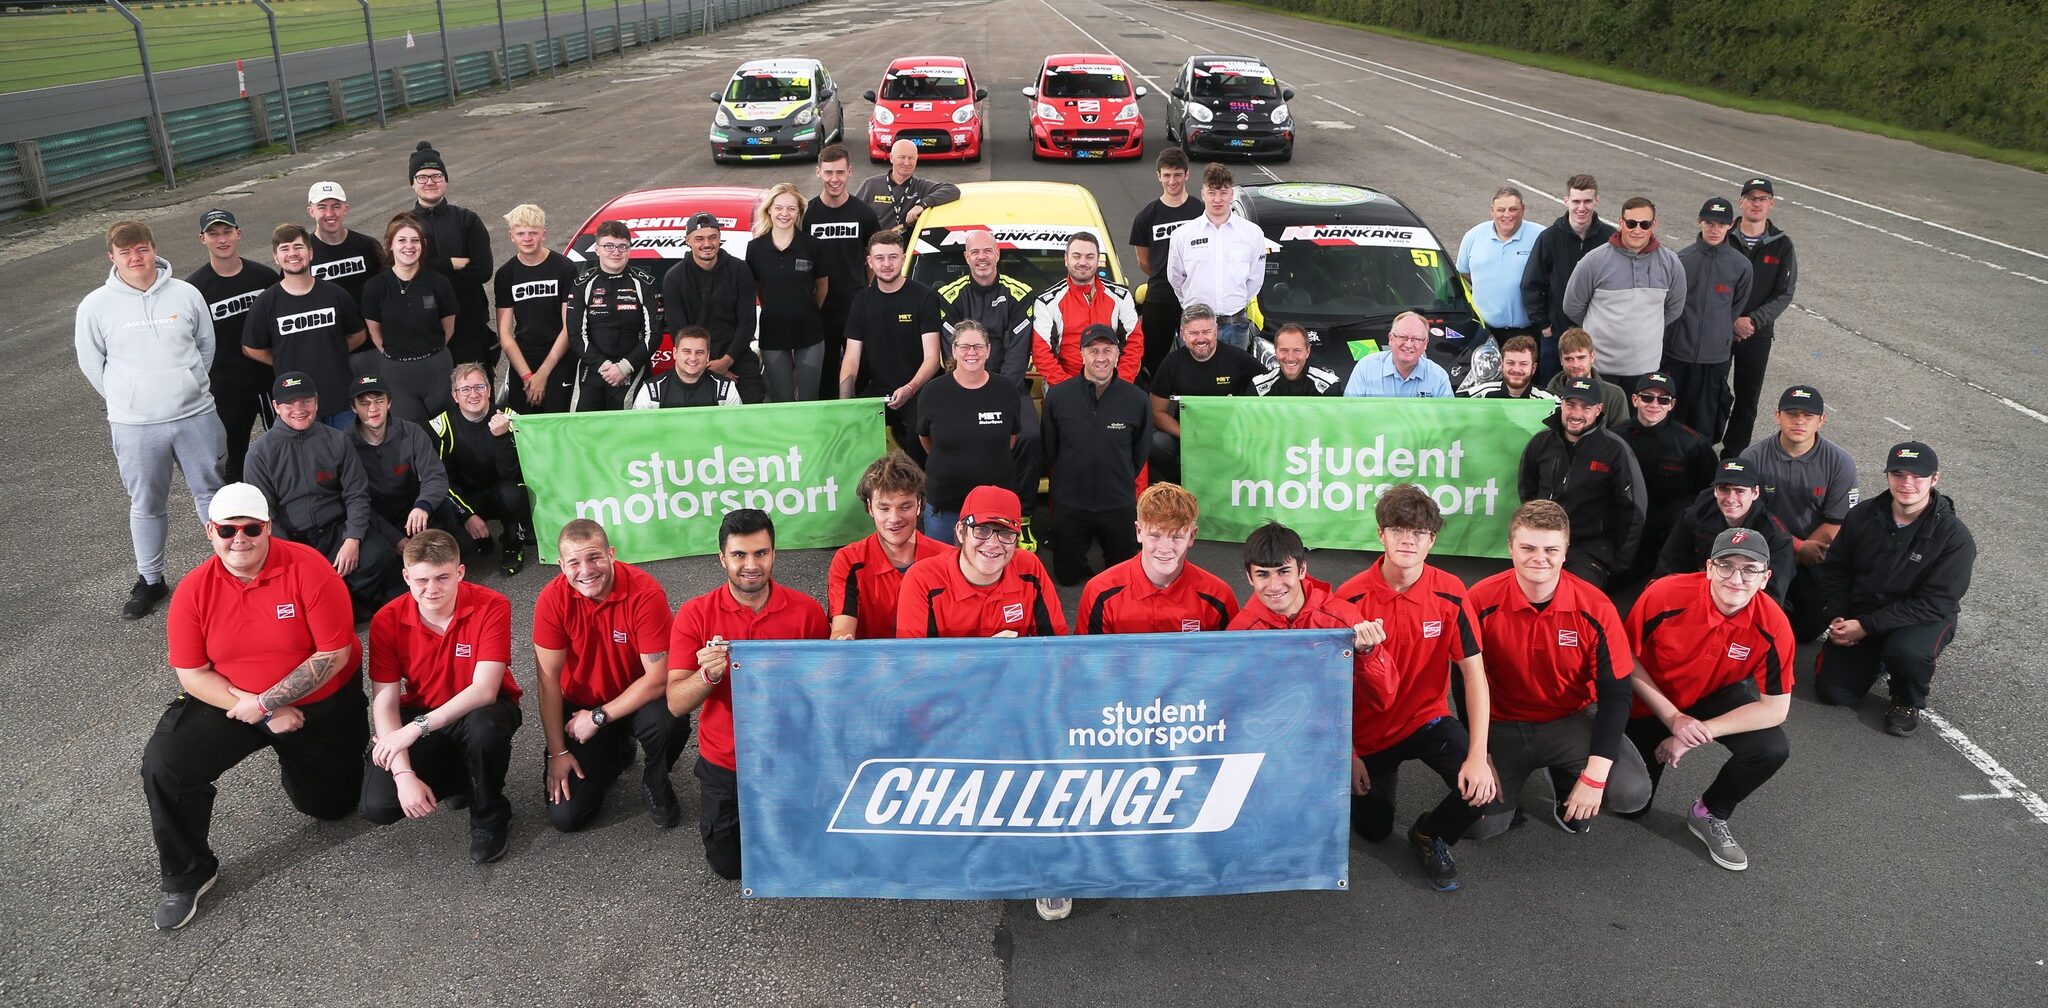 2022 Student Motorsport Challenge teams and cars gathered together